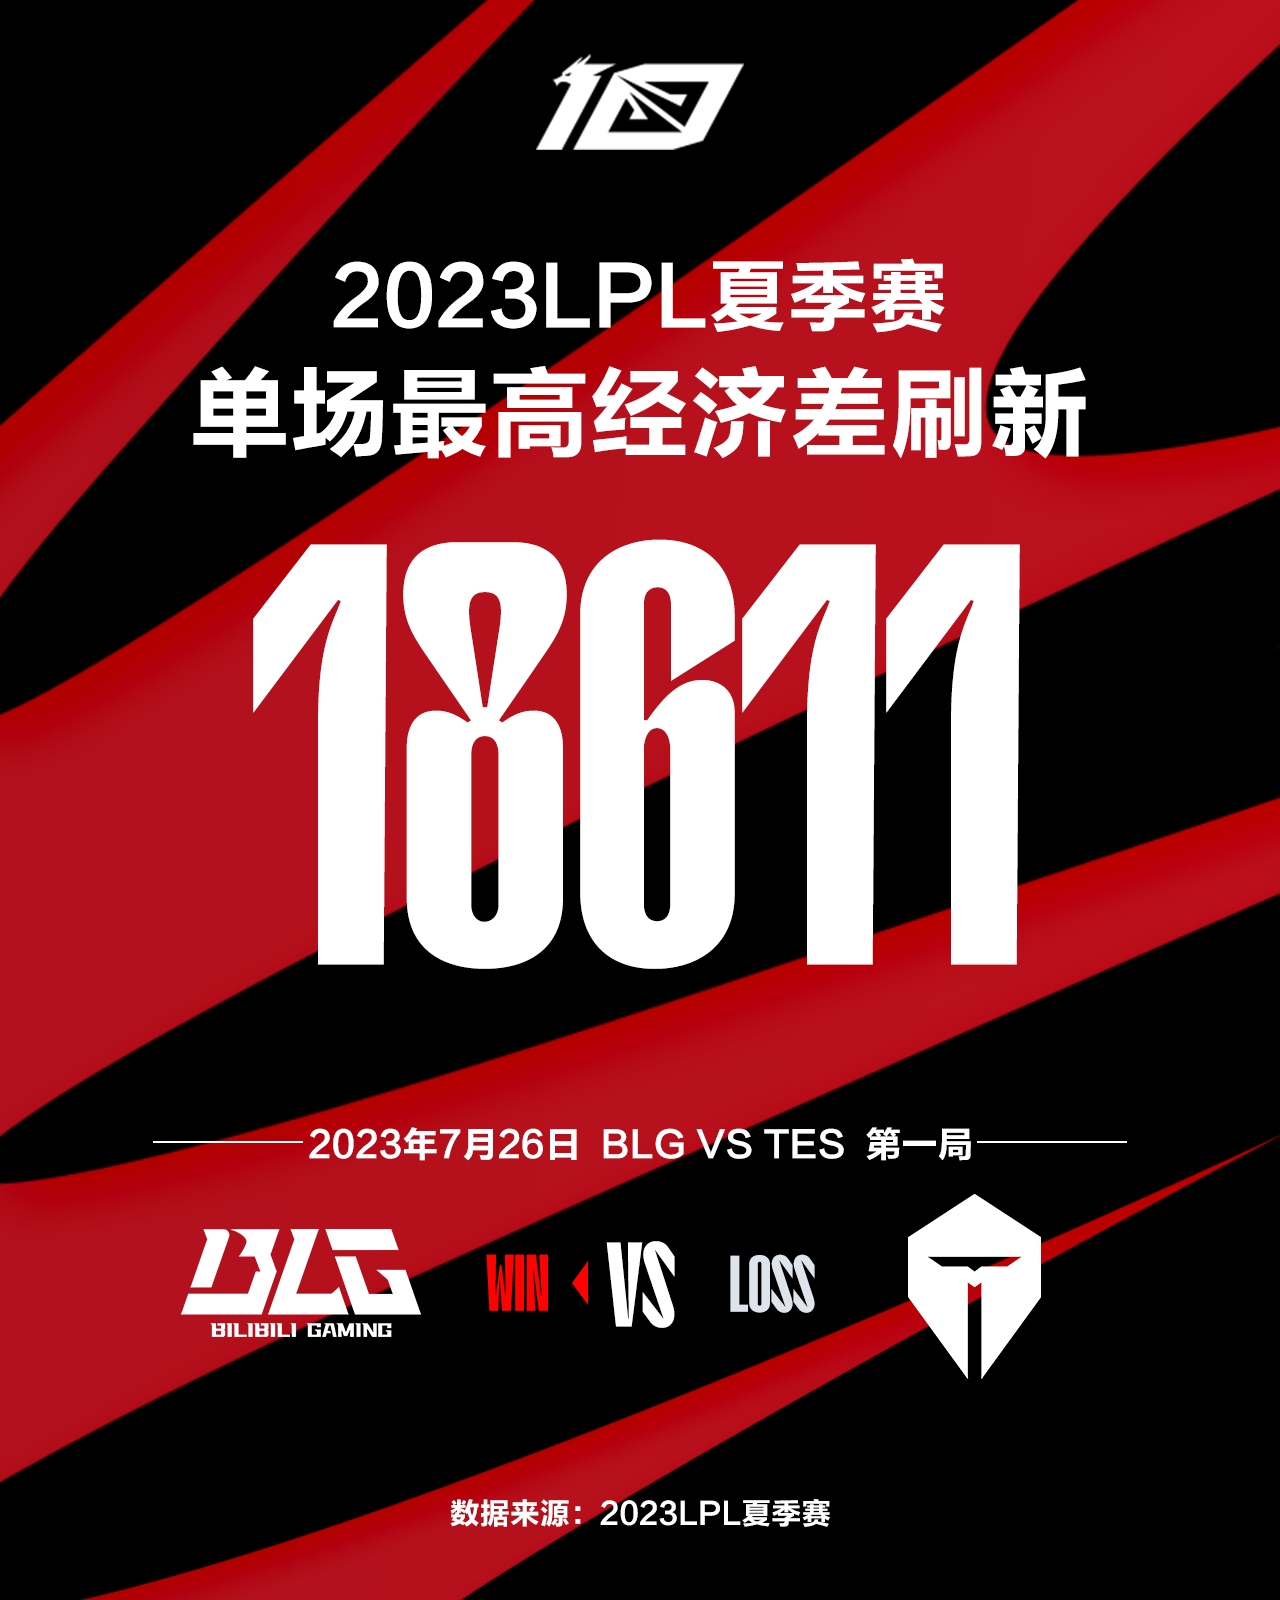 BLGvsTES首局 刷新2023LPL夏季赛单场最高经济差纪录18611